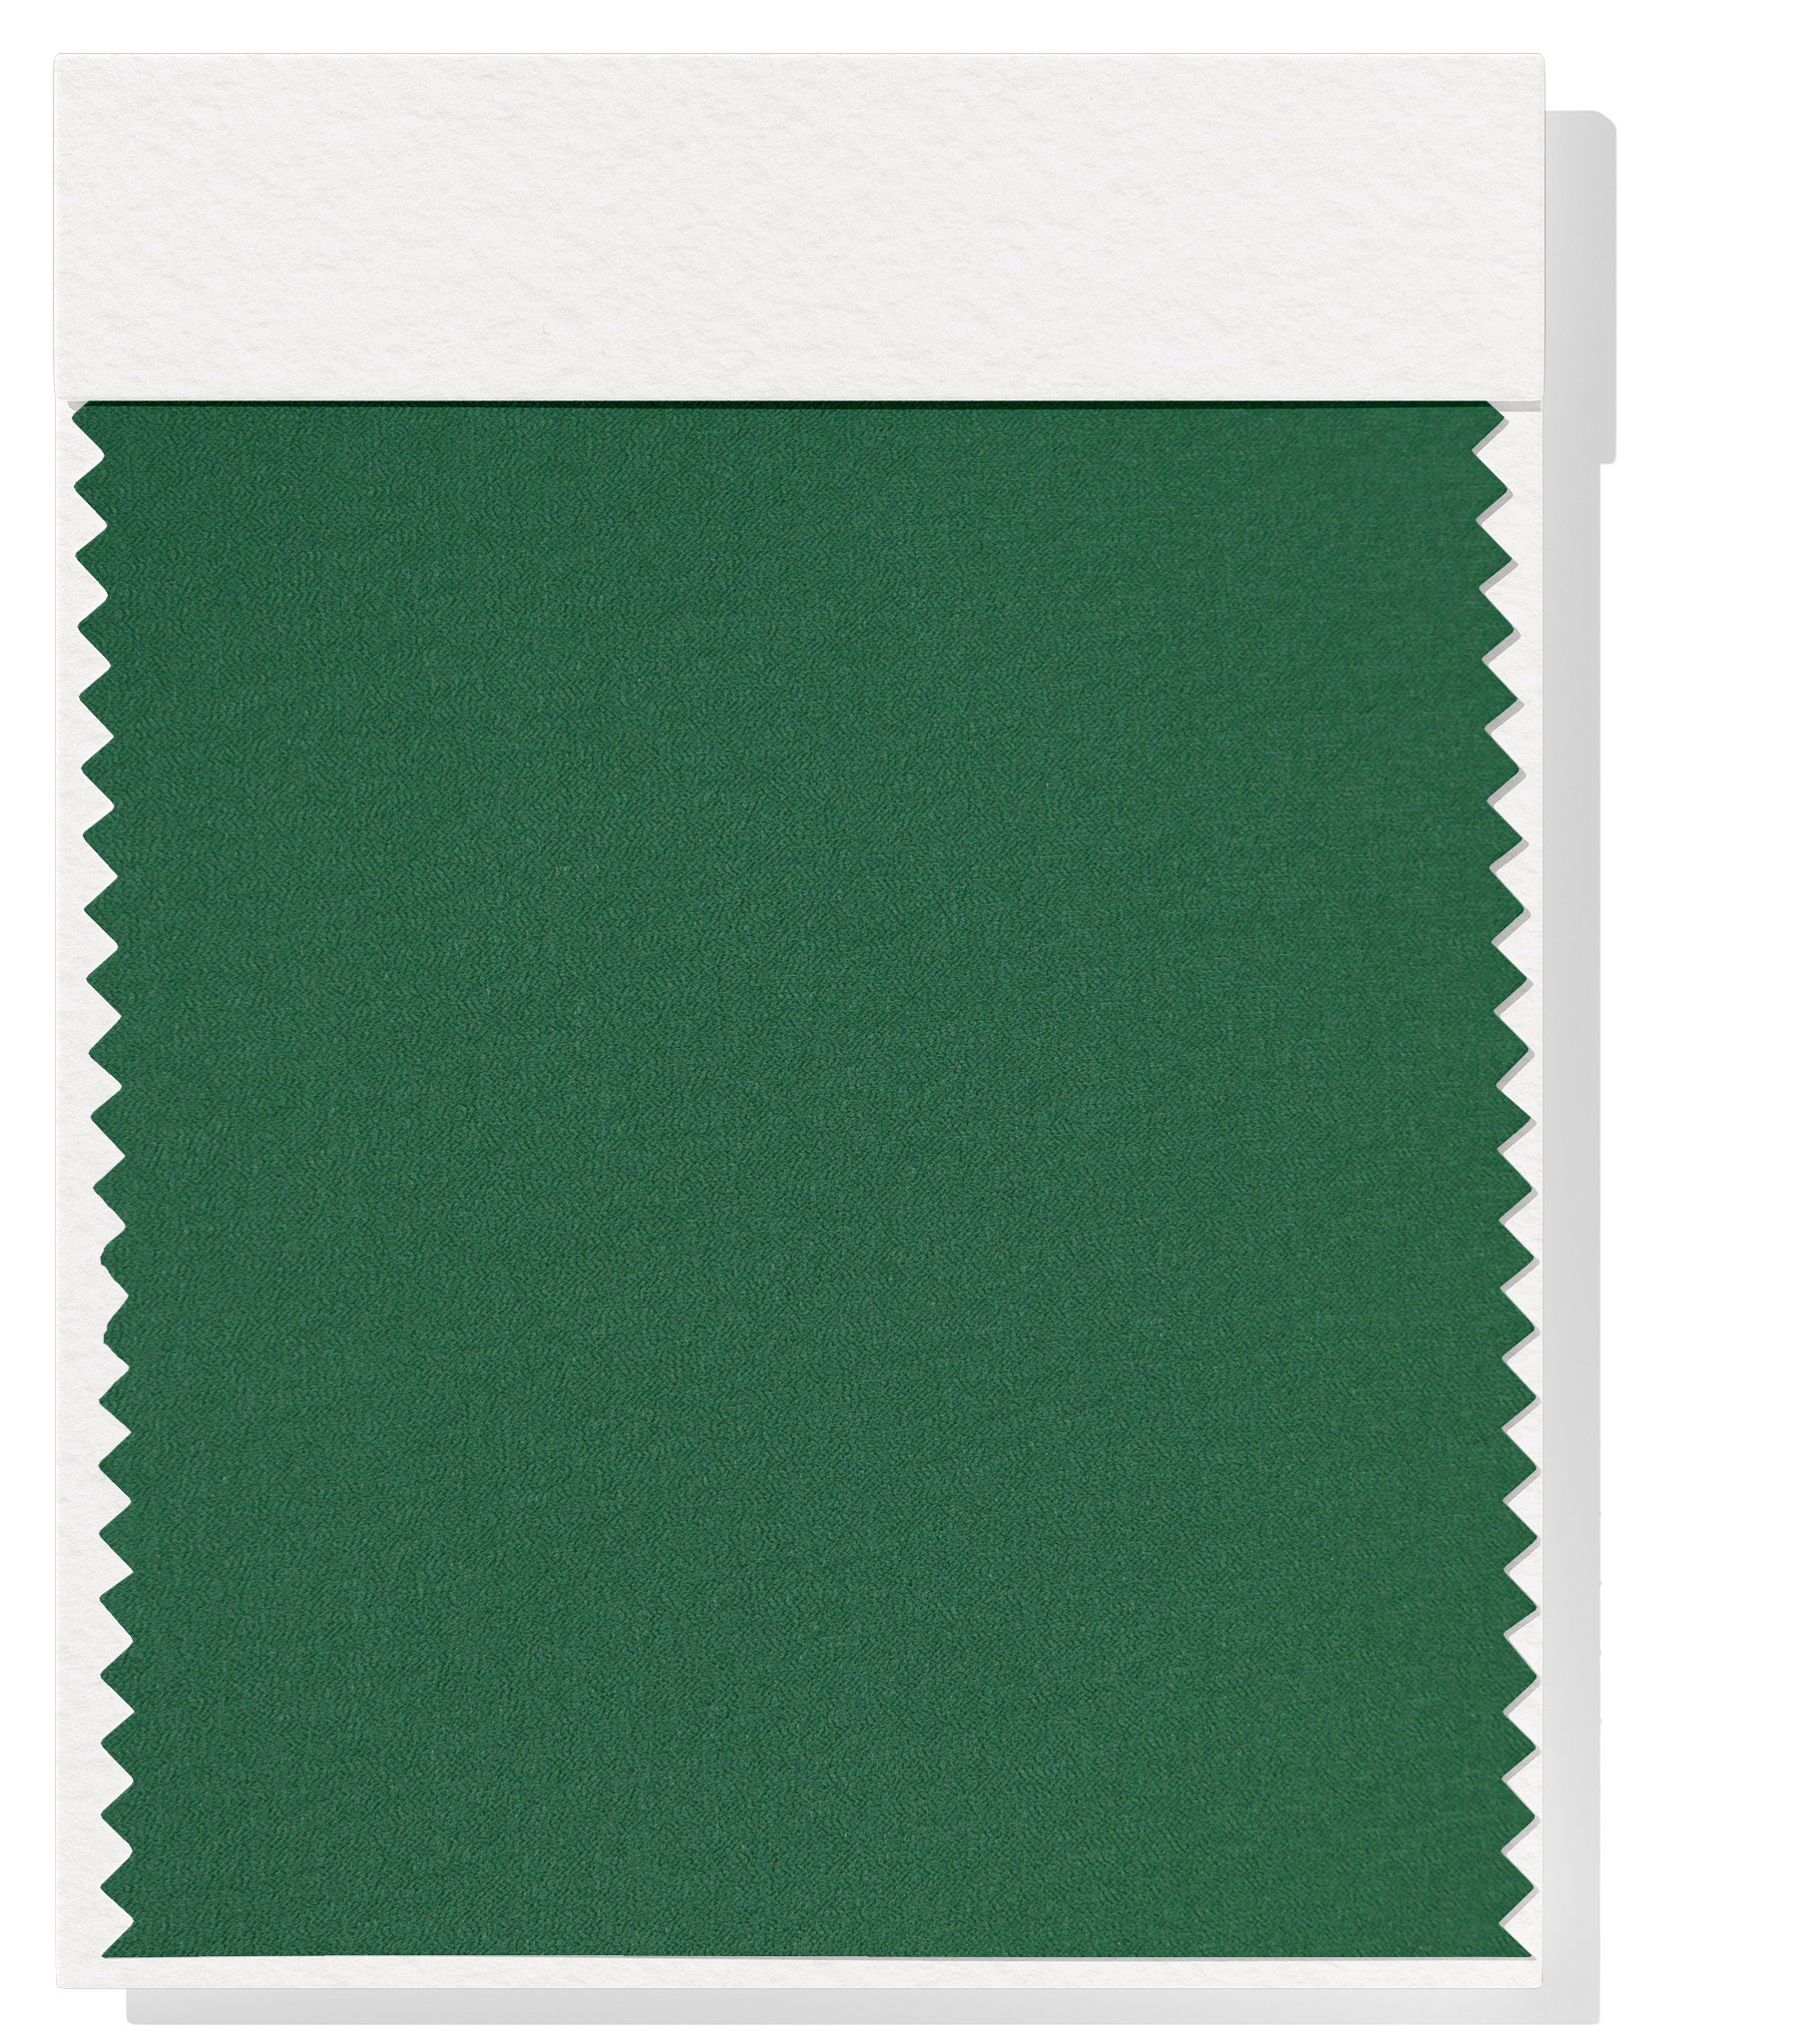 Pearl Chiffon $10.00p/m - Emerald